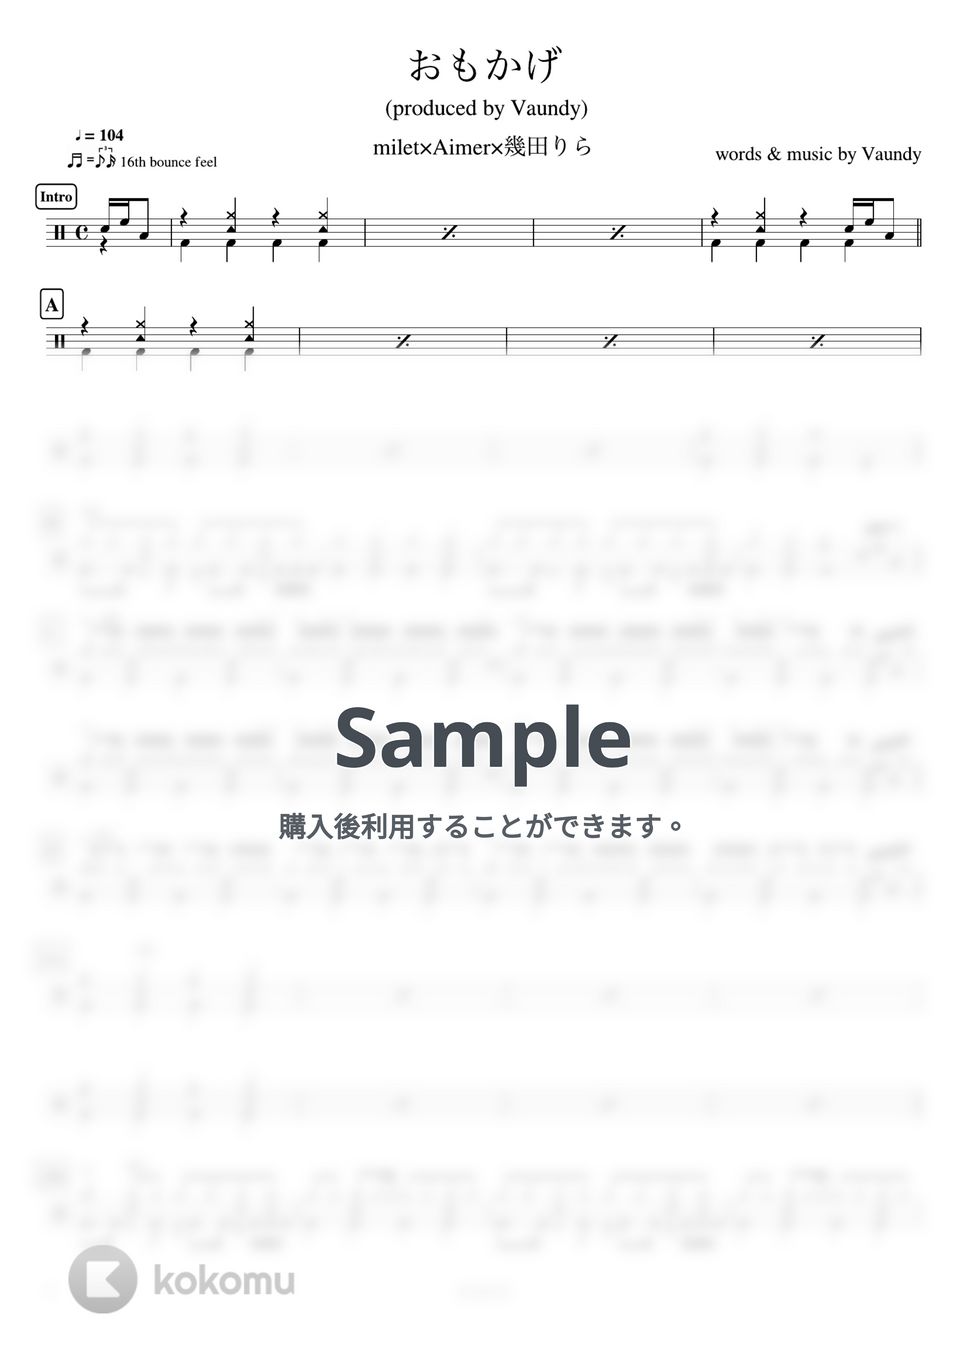 milet×Aimer×幾田りら - おもかげ (produced by Vaundy) by ドラムが好き！